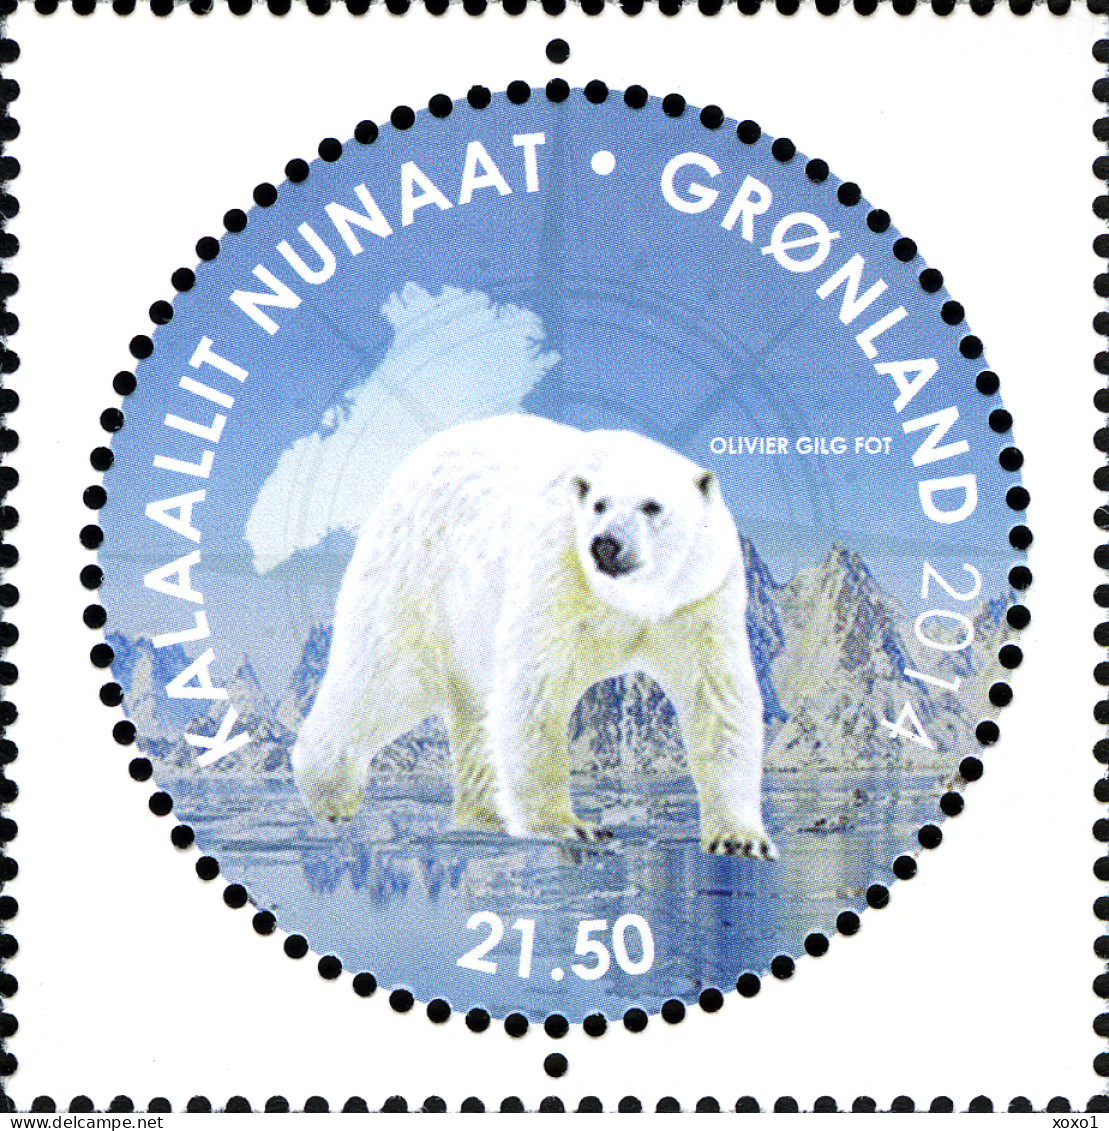 Greenland 2014 MiNr. 680 (Block 70) Dänemark Grönland Ross Antarctica Pole Bears BIRDS Penguins 1v + S\sh MNH** 13.00 € - Faune Arctique